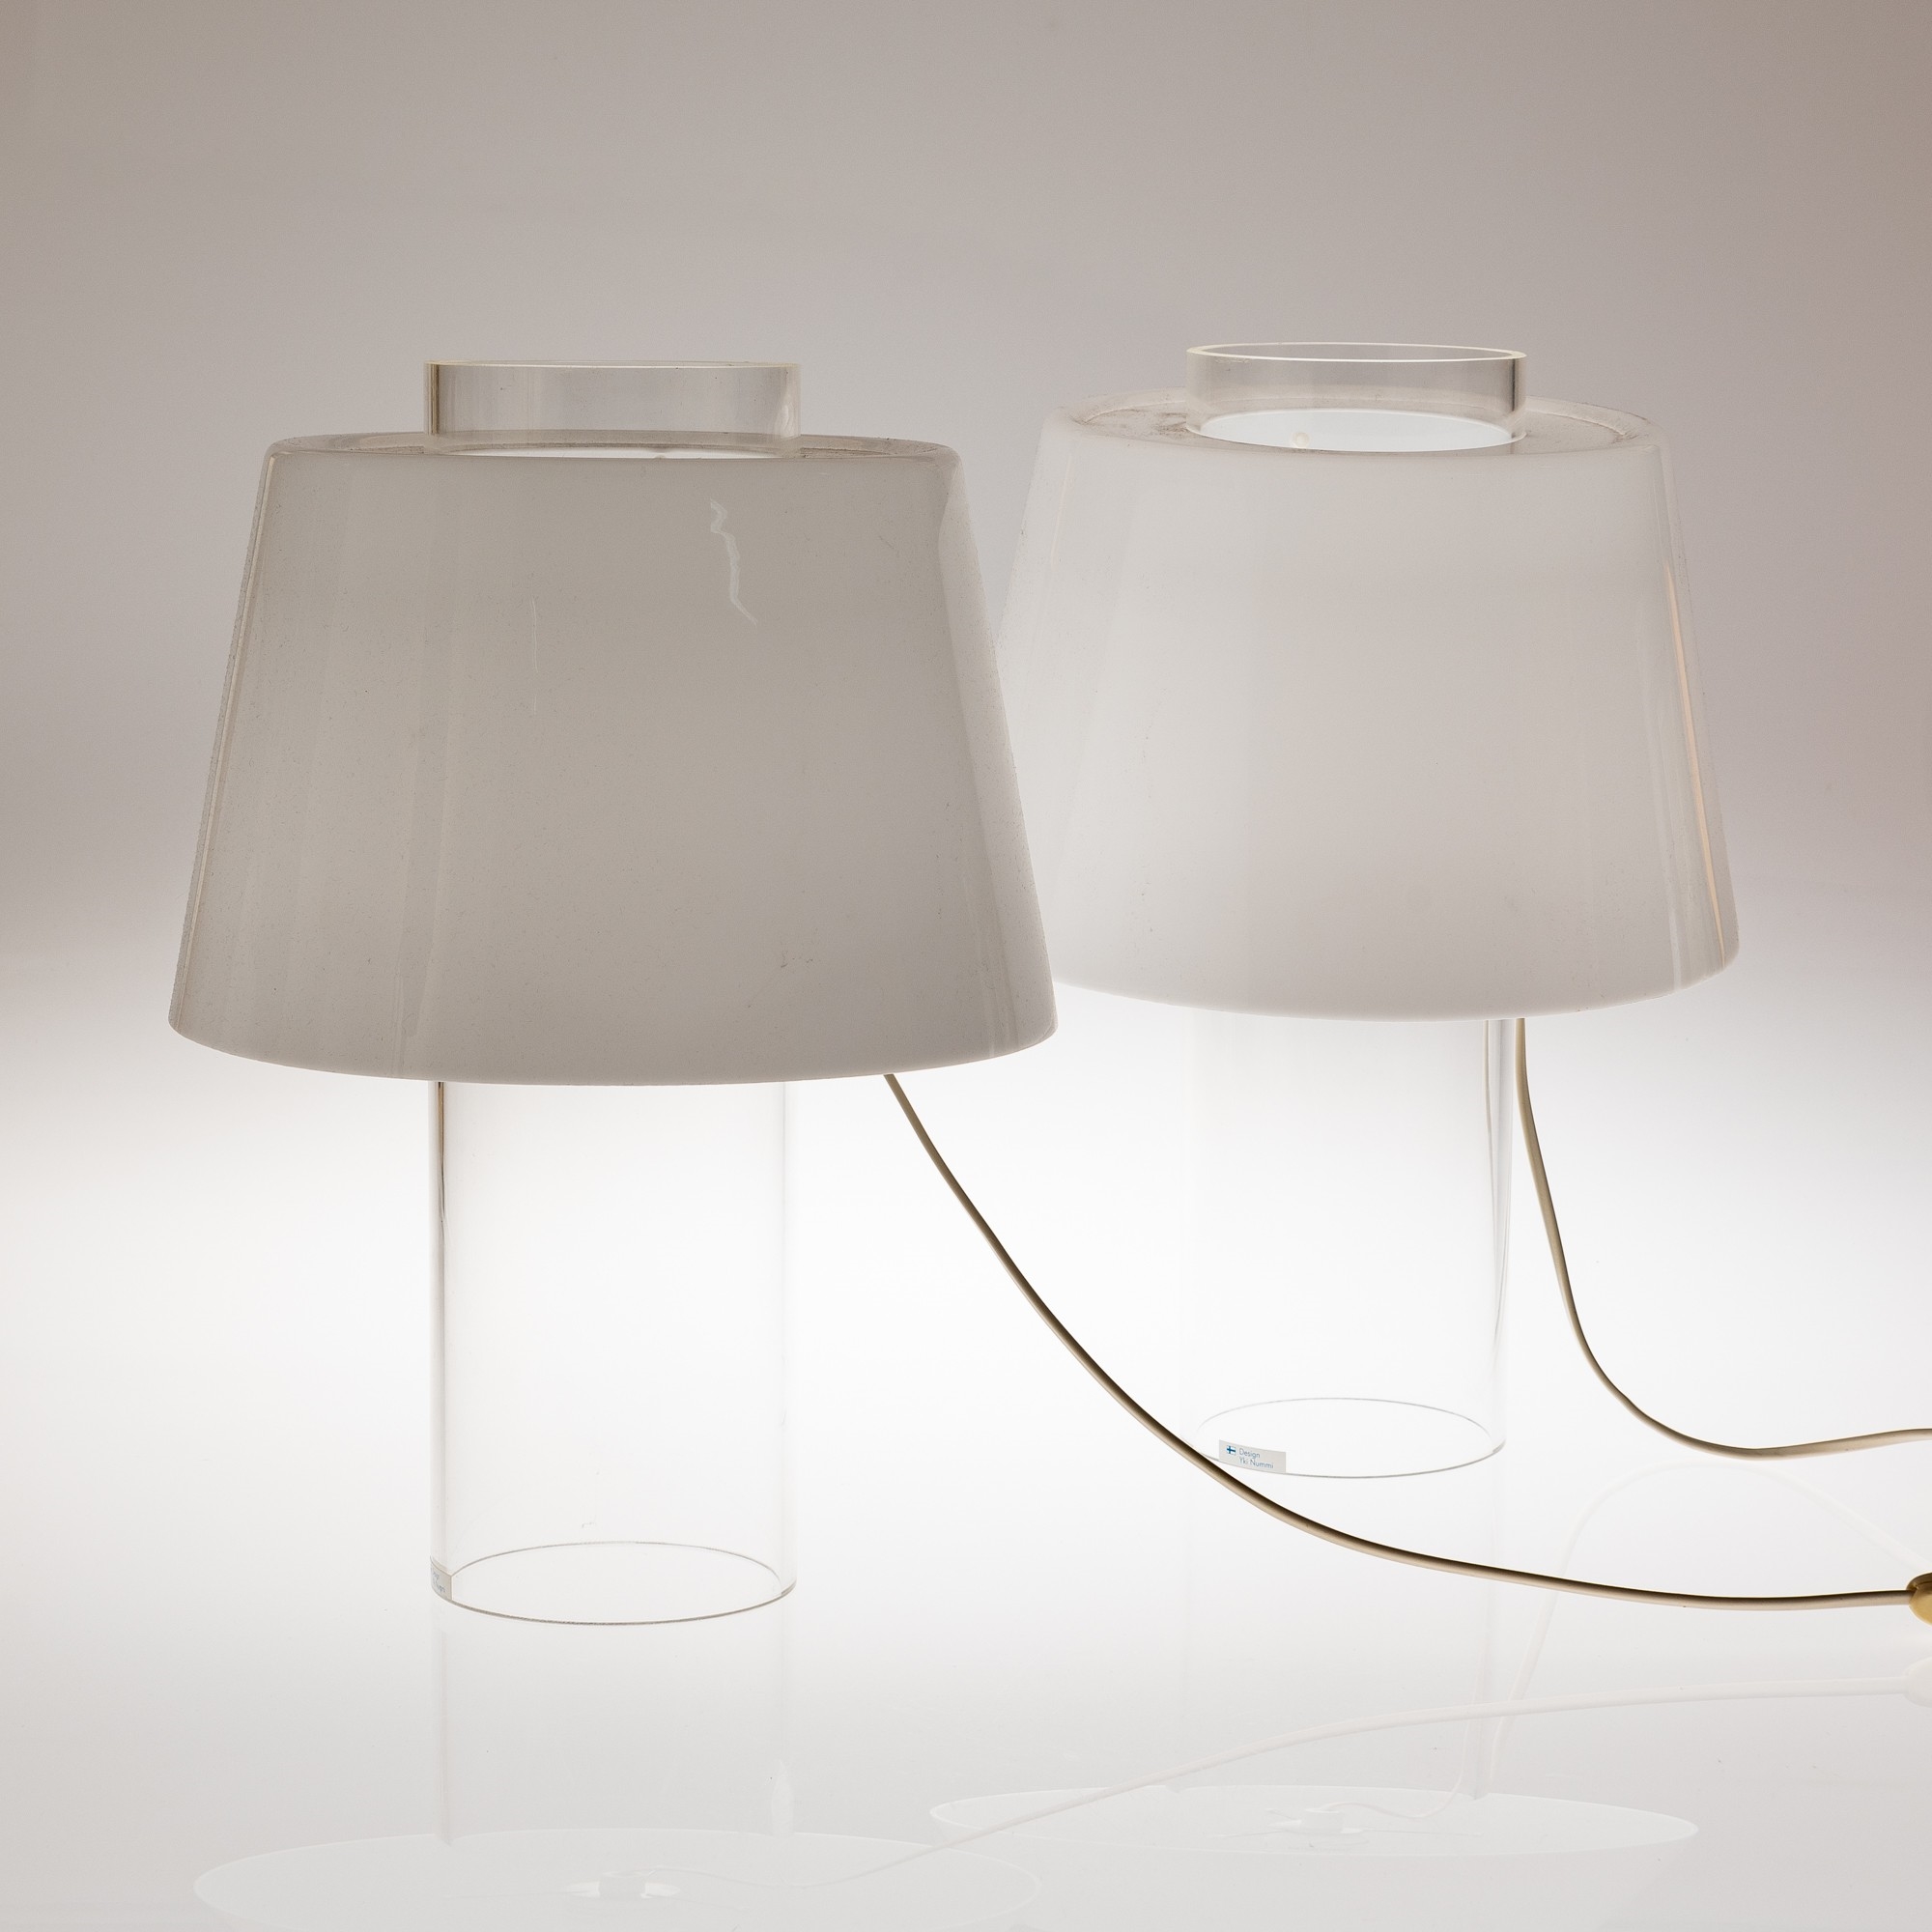 Artwork by Yki Nummi, Table lights, Modern Art, late 20th Century, Made of white acrylic